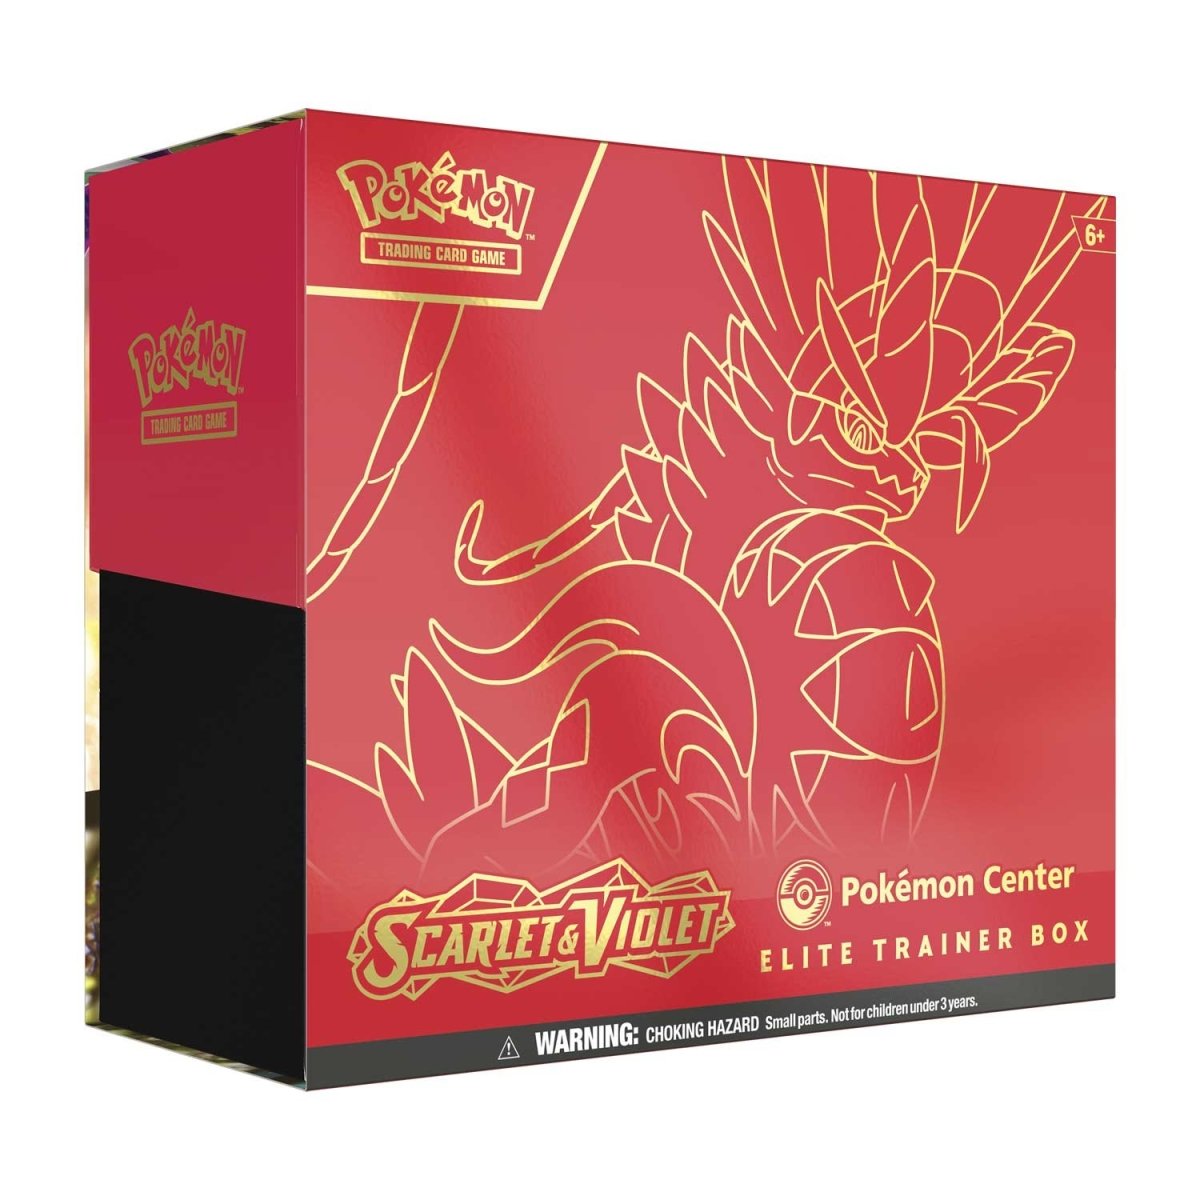 Pokémon TCG Scarlet & Violet 151 Pokémon Center Elite Trainer Box